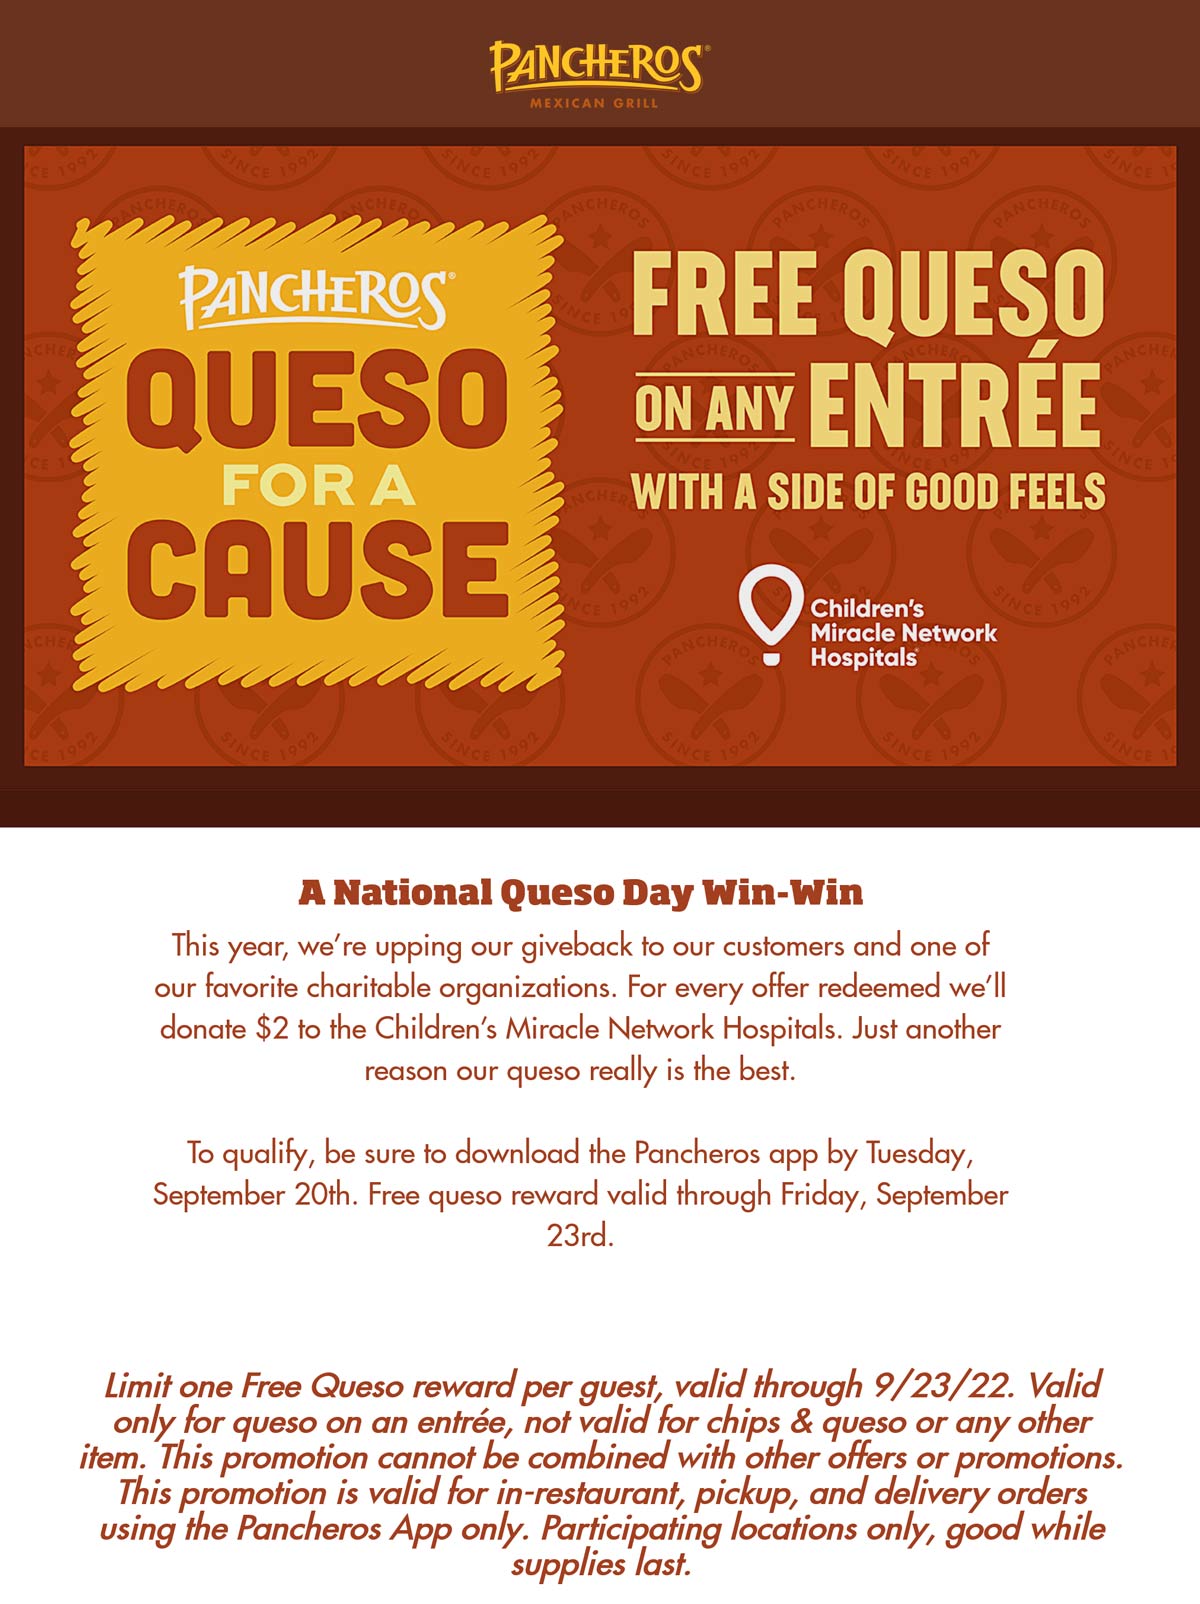 Pancheros restaurants Coupon  Free queso via mobile today at Pancheros Mexican restaurants #pancheros 